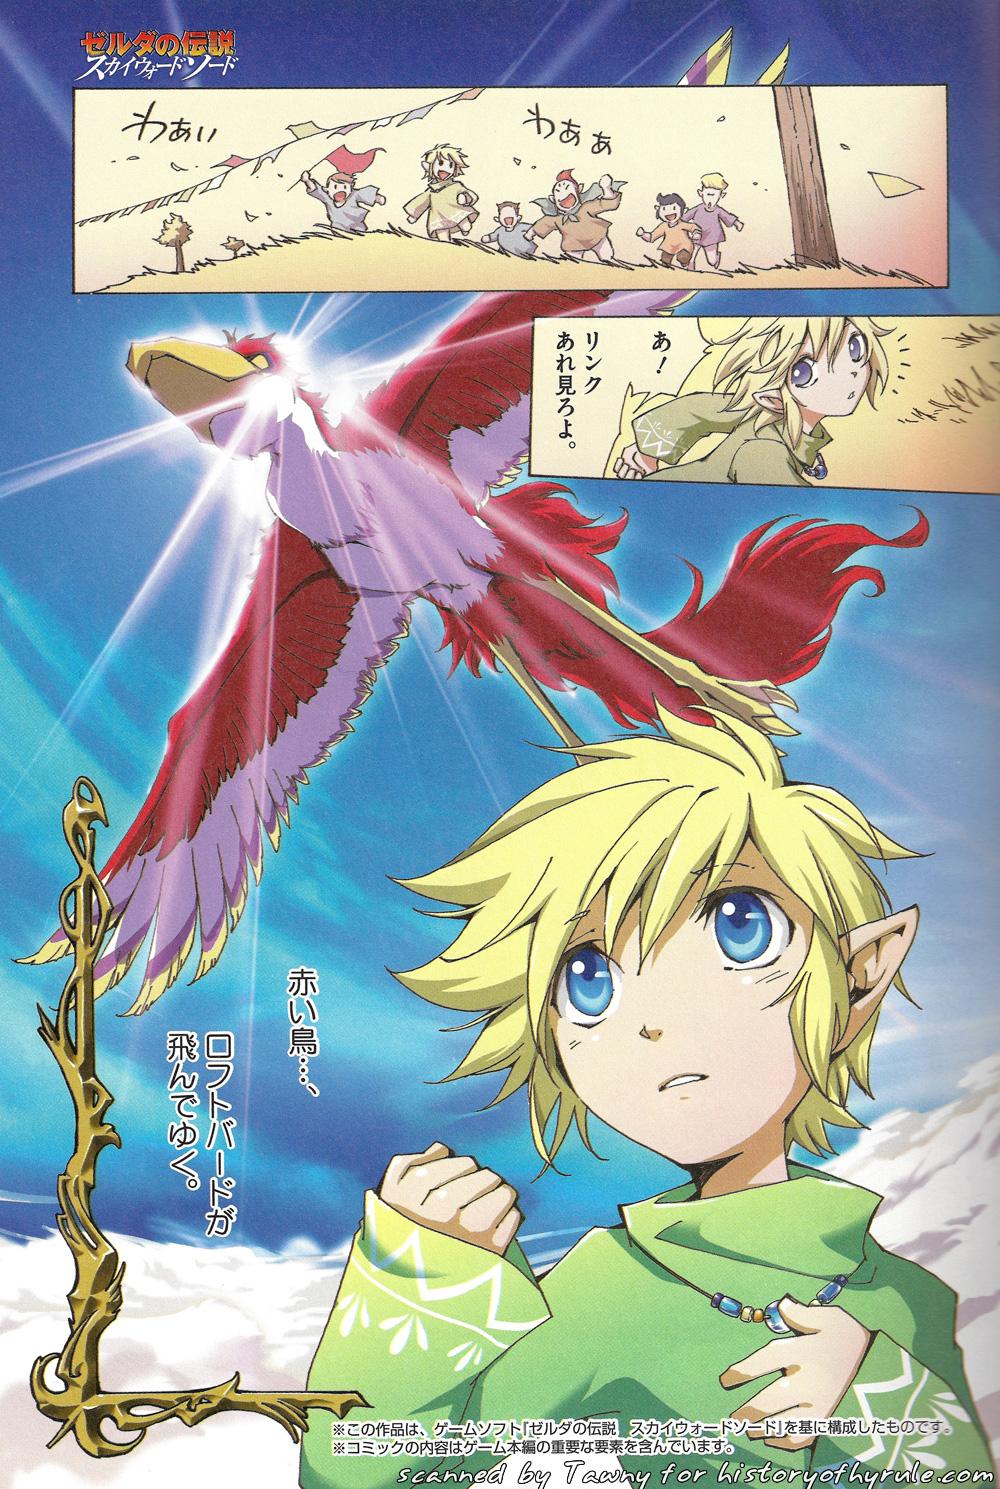 Skyward sword prequel manga